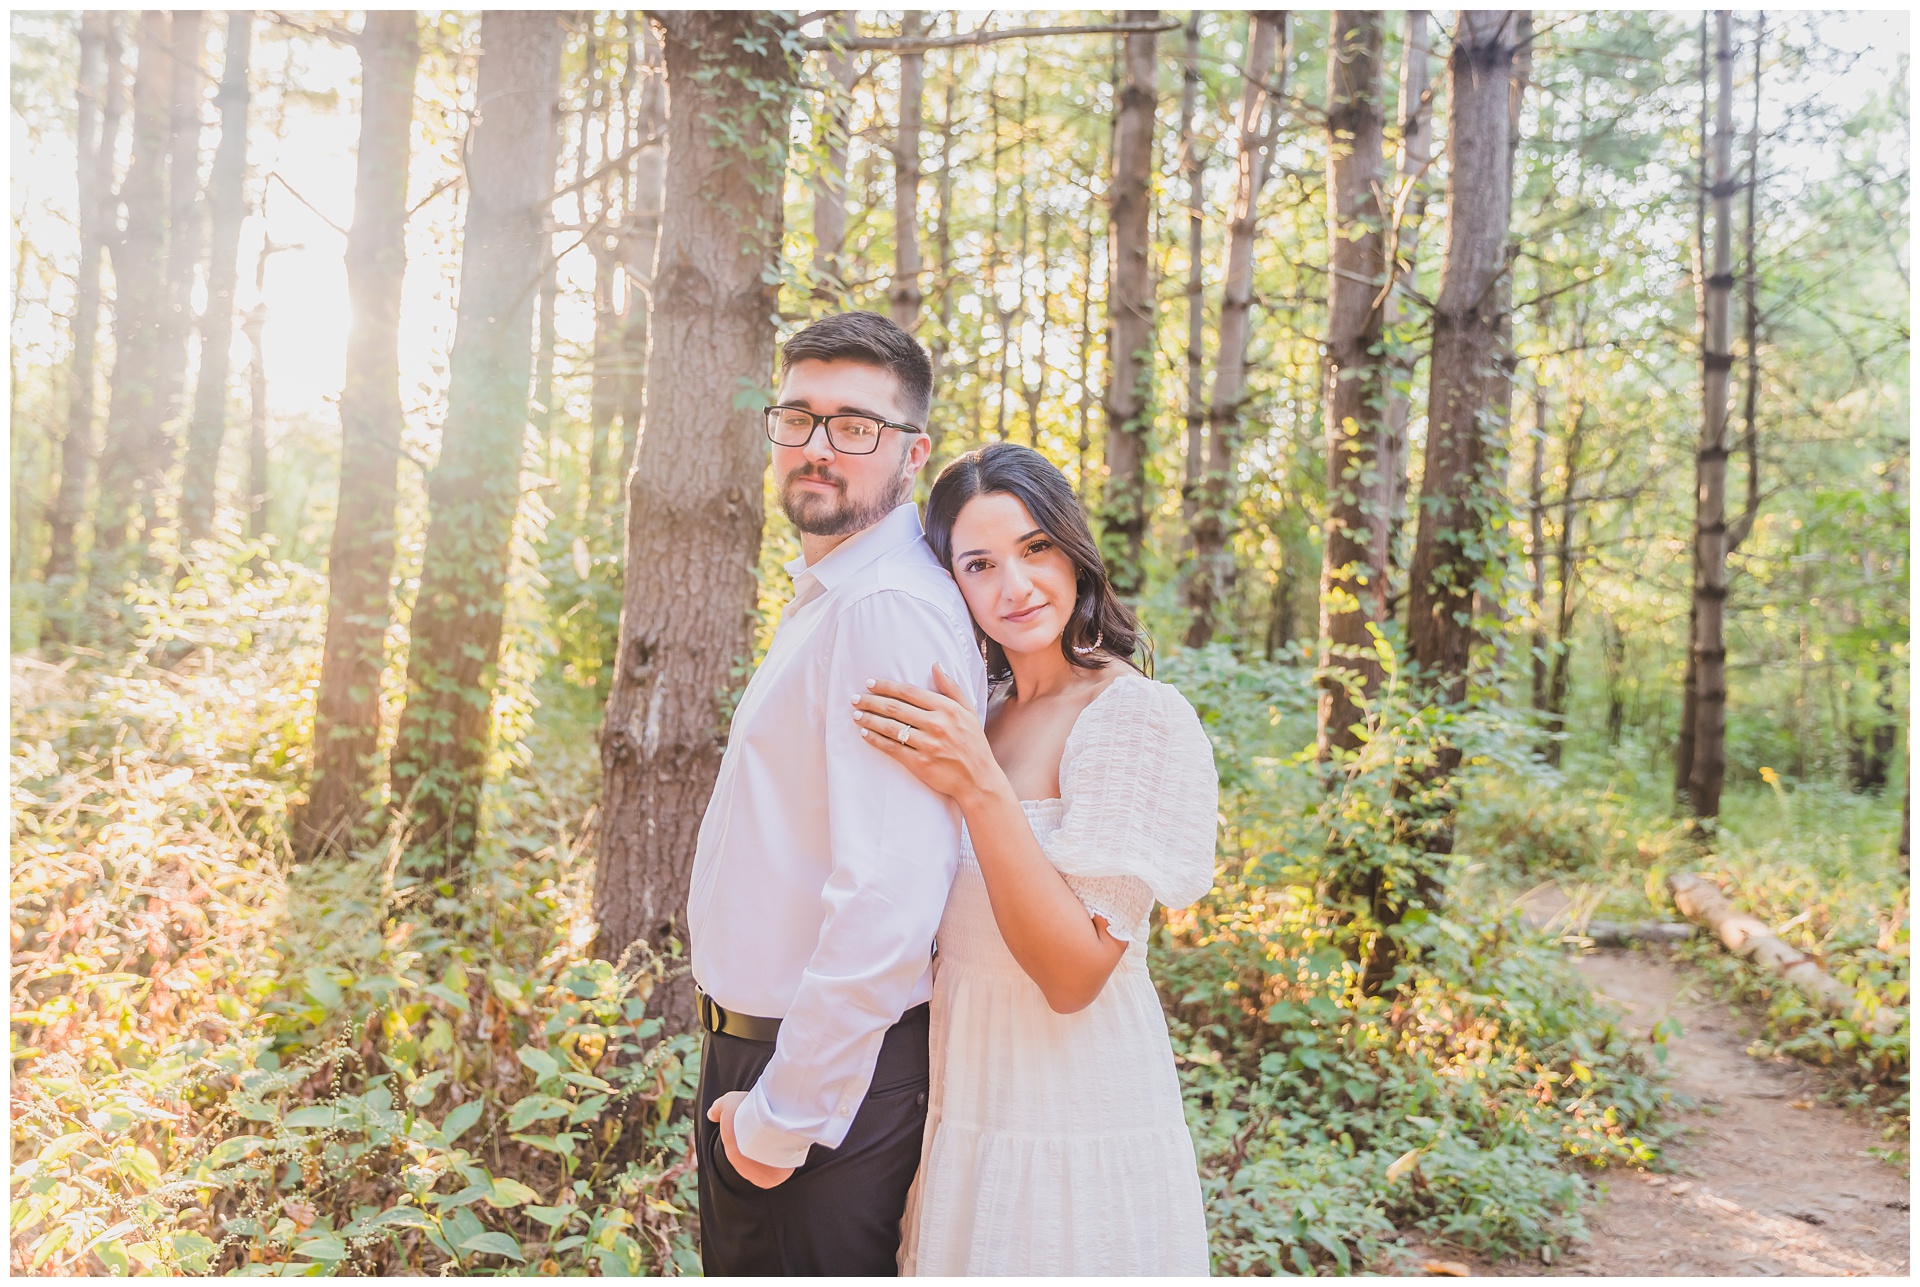 Engagement photography at Burr Oak Woods Conservation Area in Blue Springs, Missouri, by Kansas City wedding photographers Wisdom-Watson Weddings.